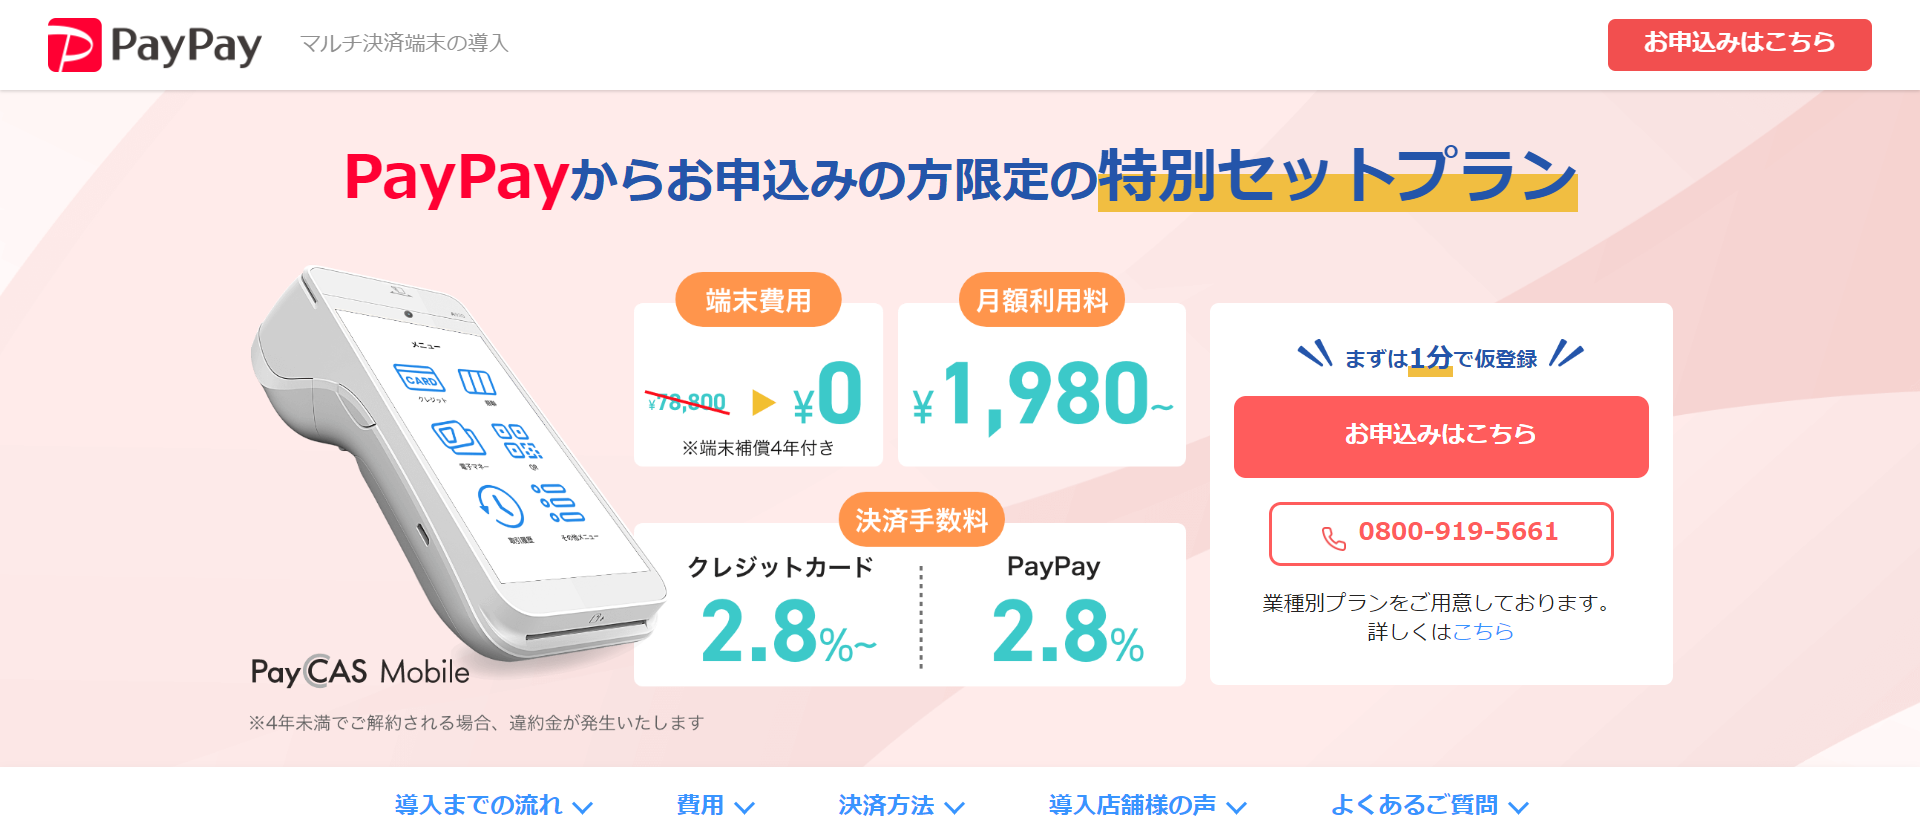 PayCAS Mobile(yCLXoC)